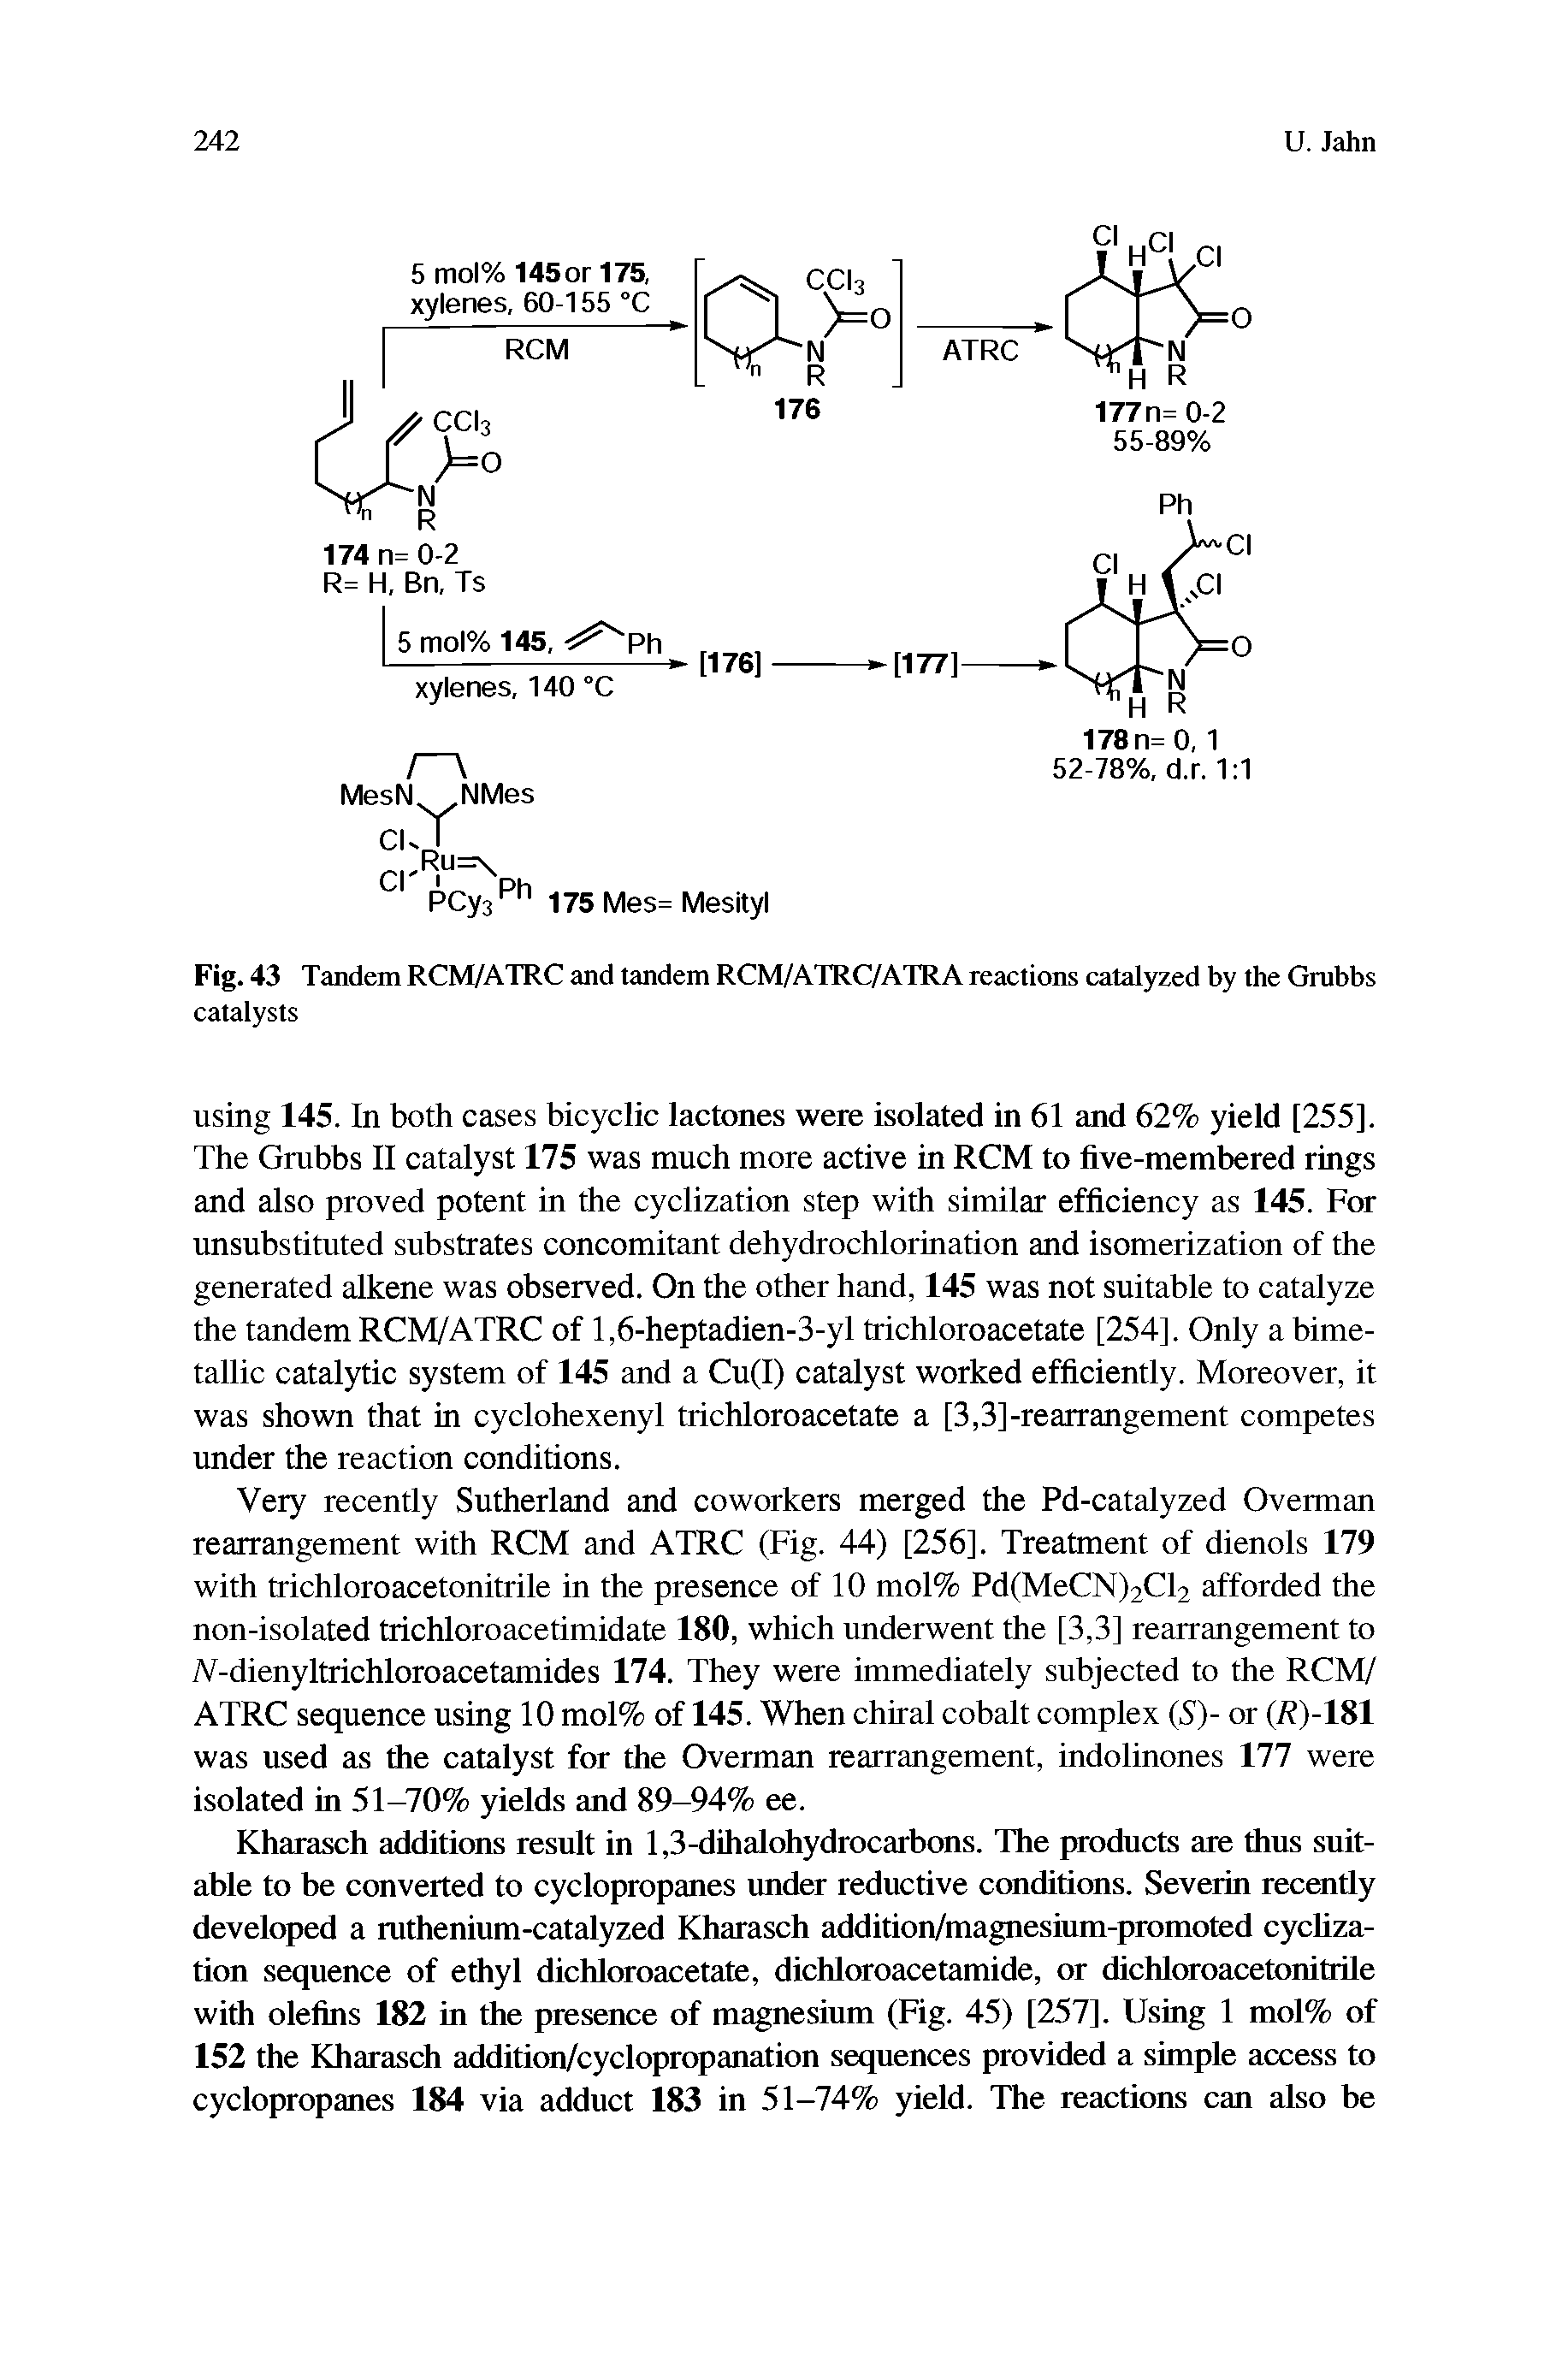 Fig. 43 Tandem RCM/ATRC and tandem RCM/ATRC/ATRA reactions catalyzed by the Grubbs catalysts...